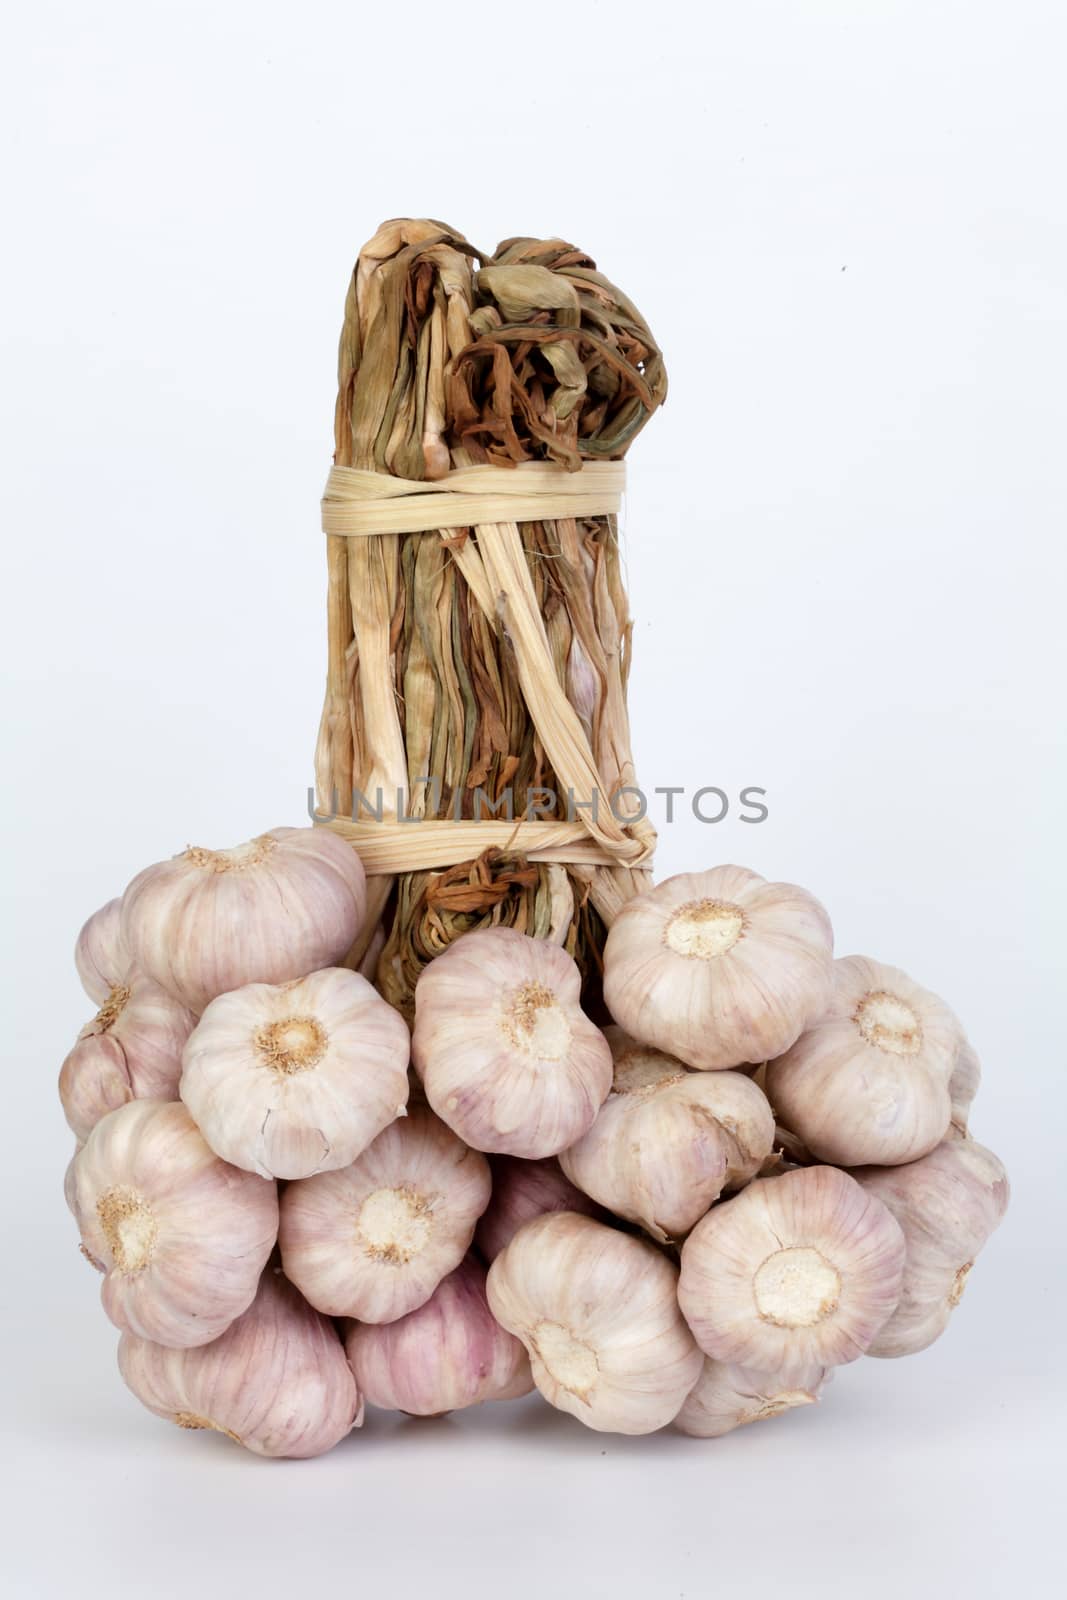 Bunch of Garlic sale in market